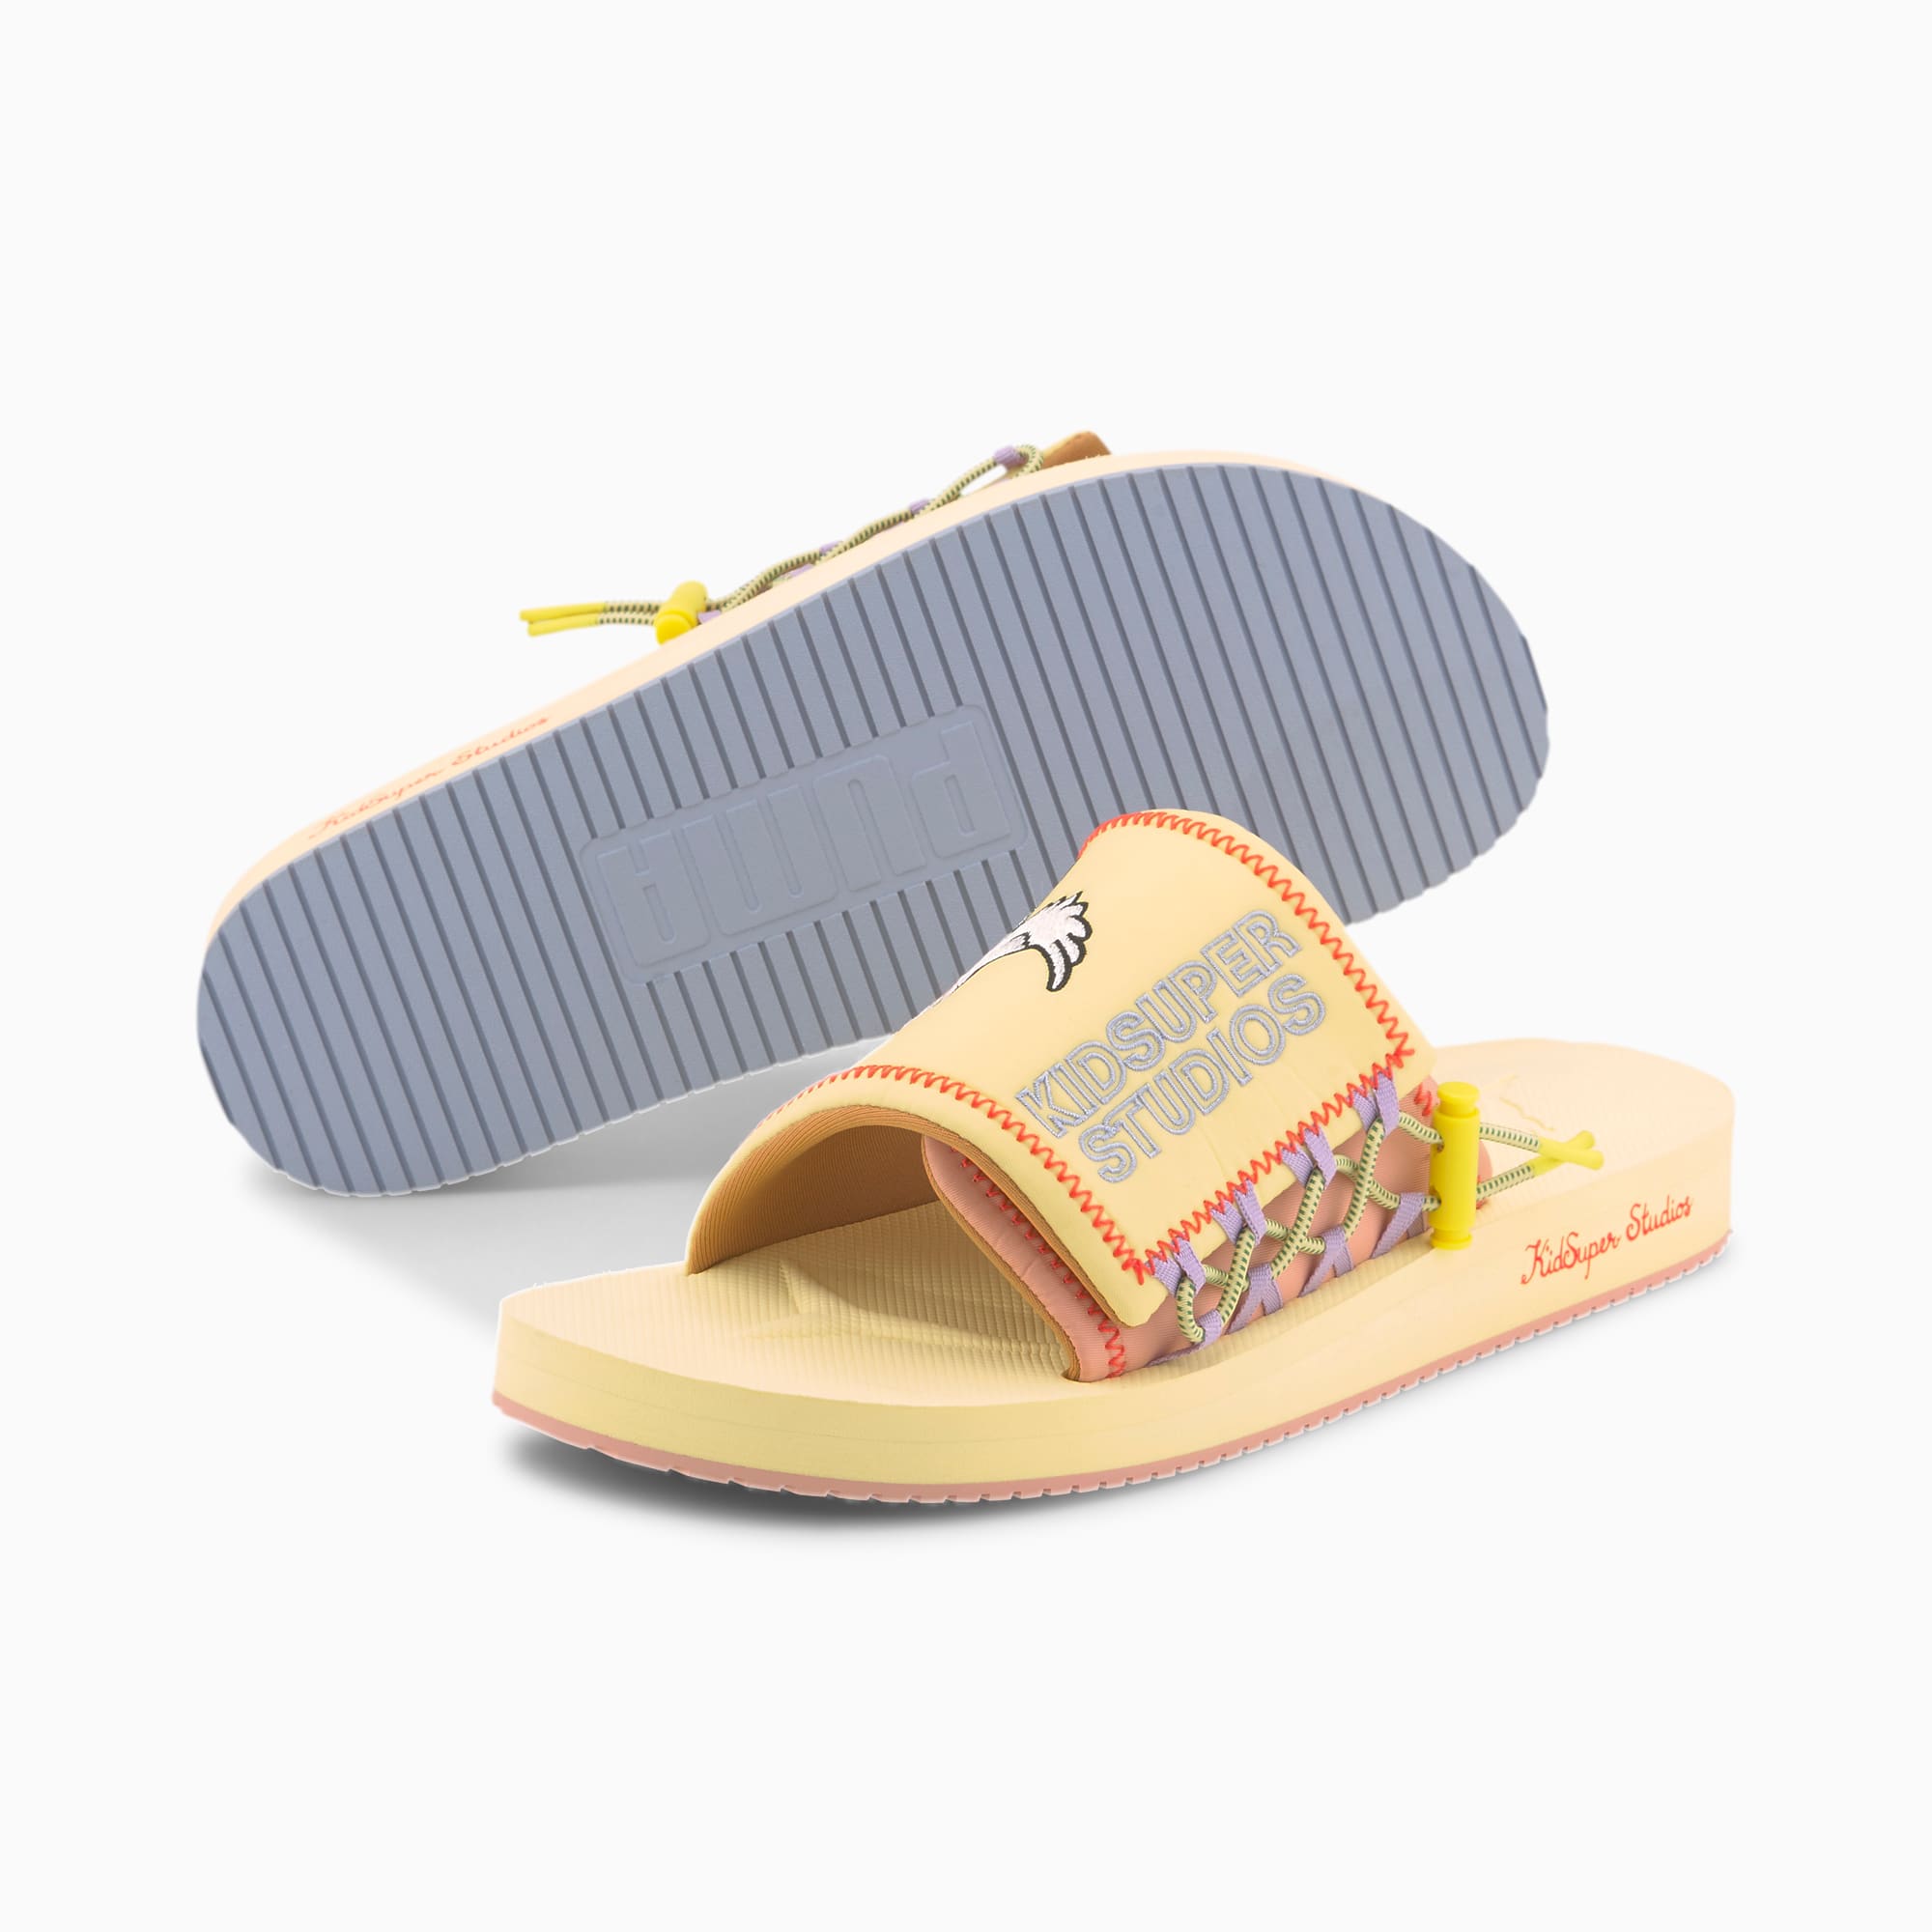 puma yellow sandals